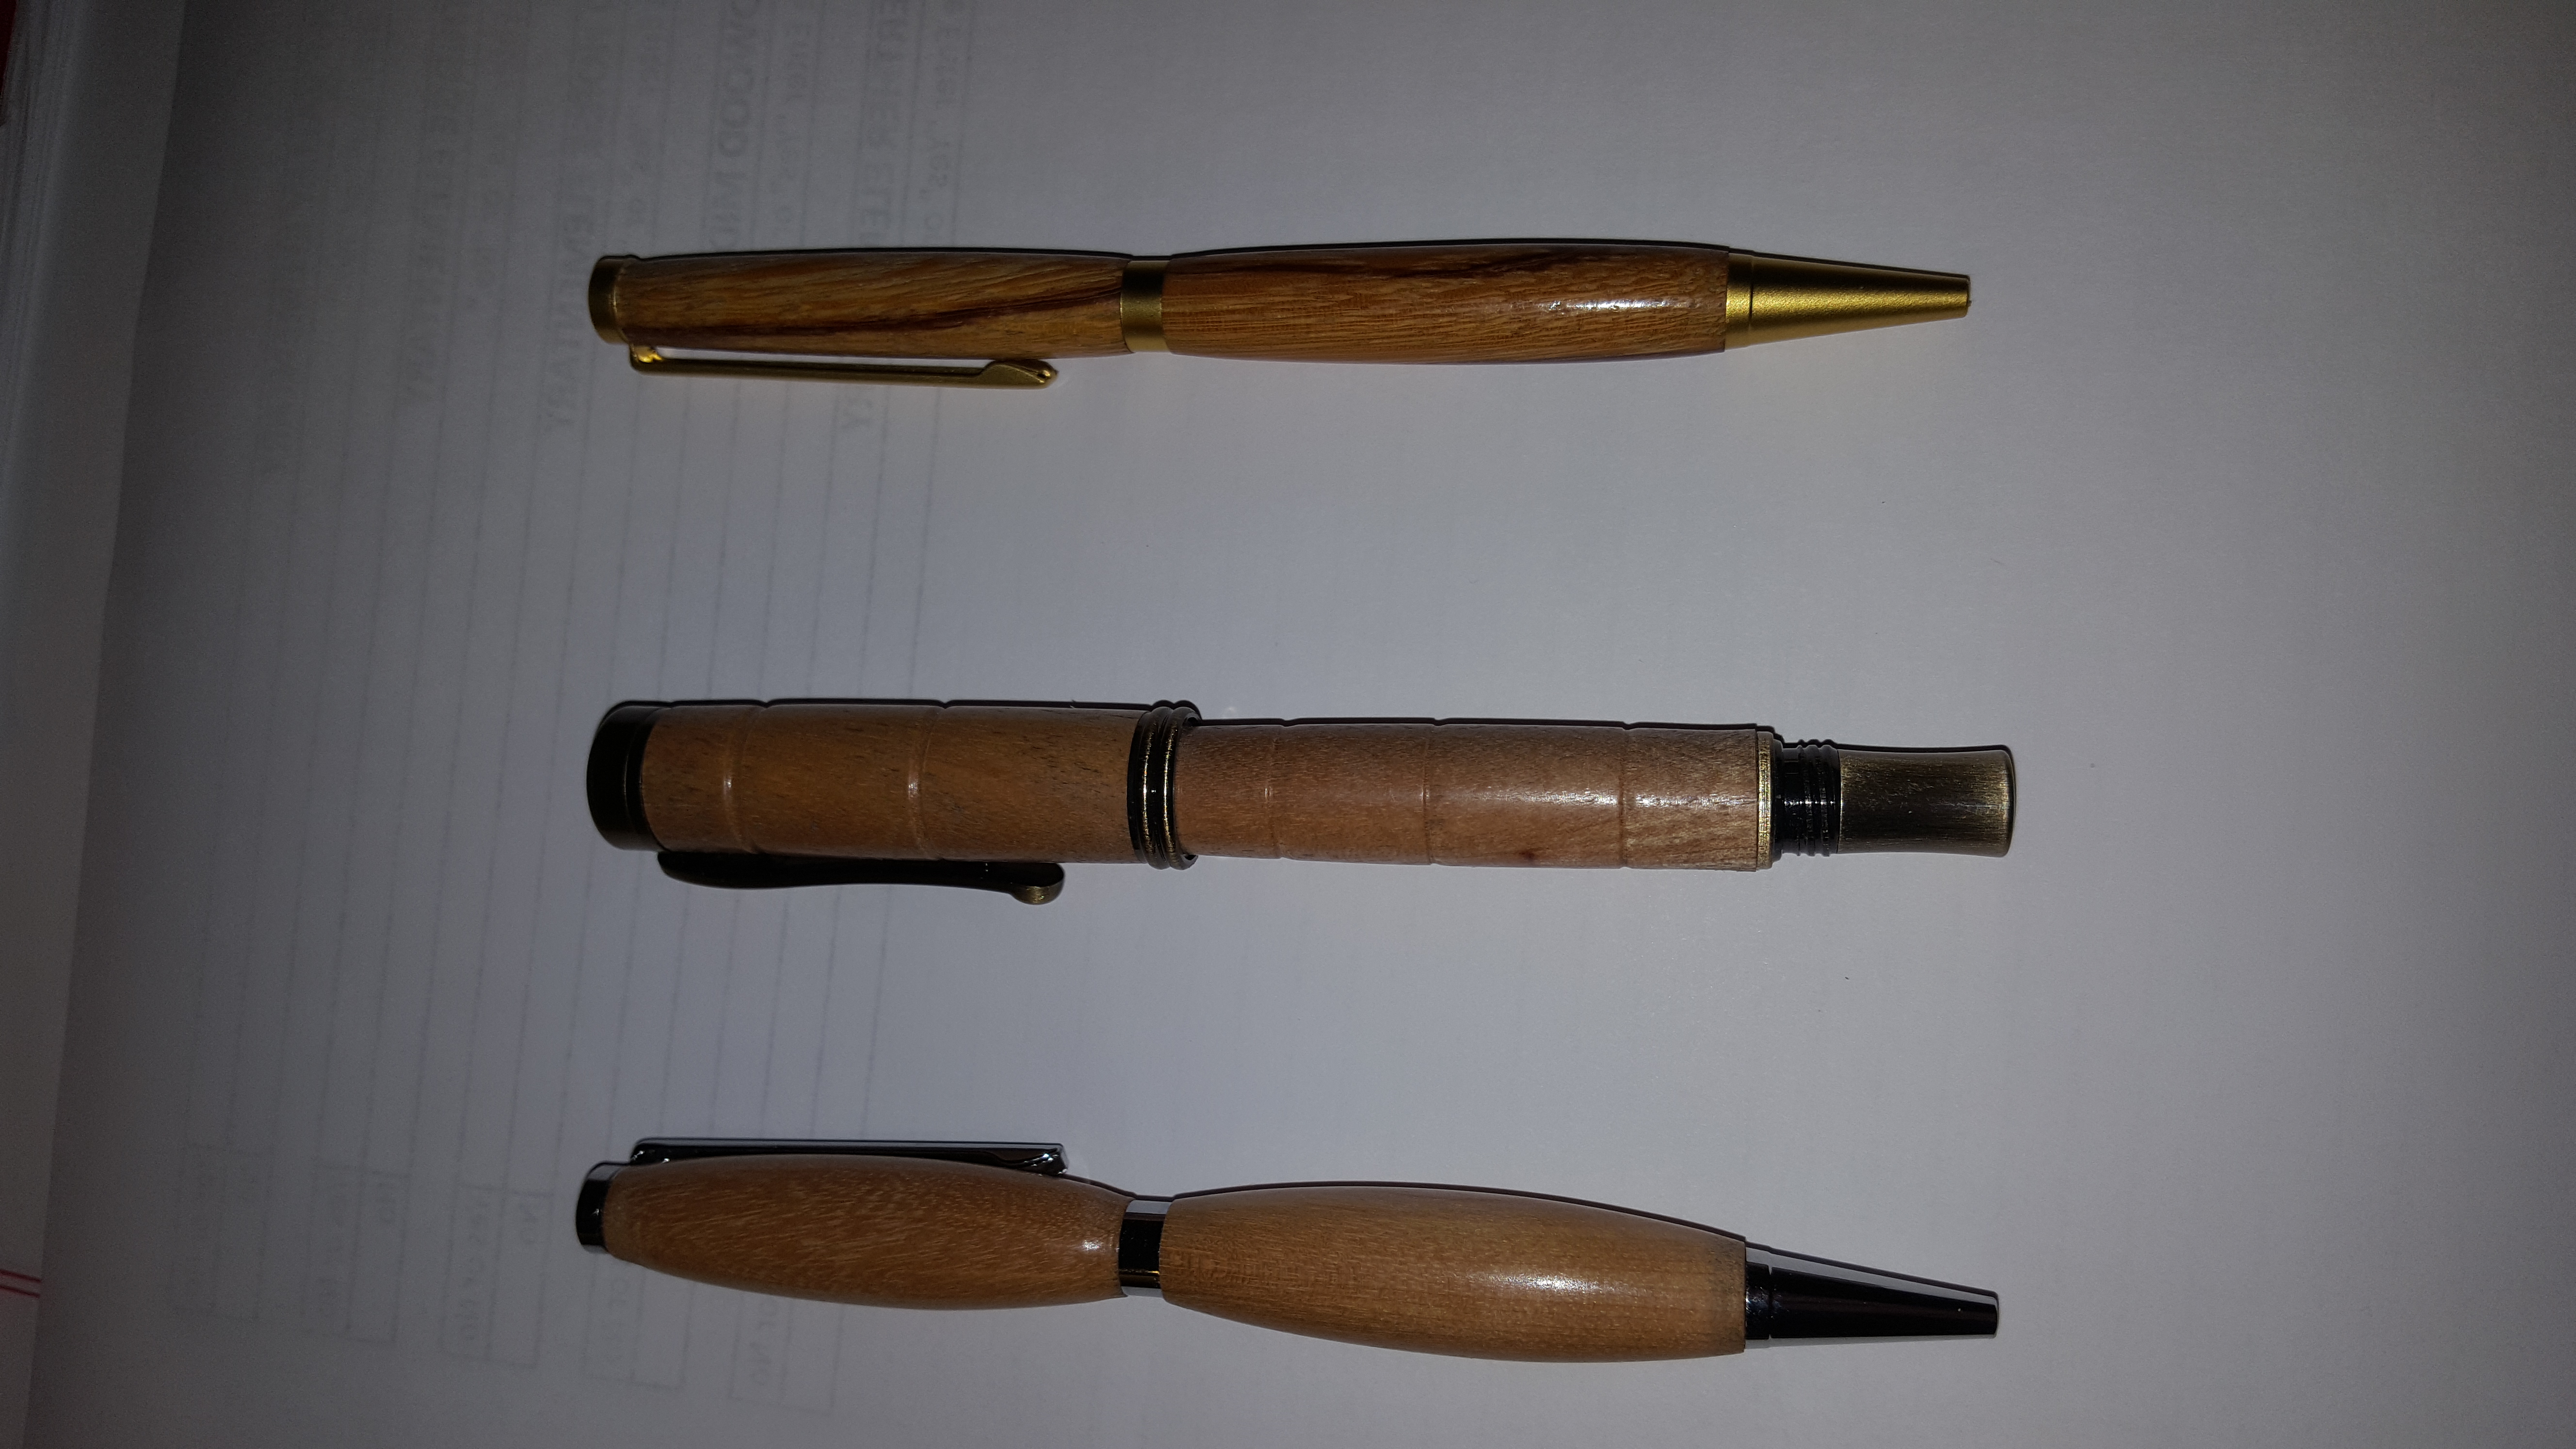 First three pens